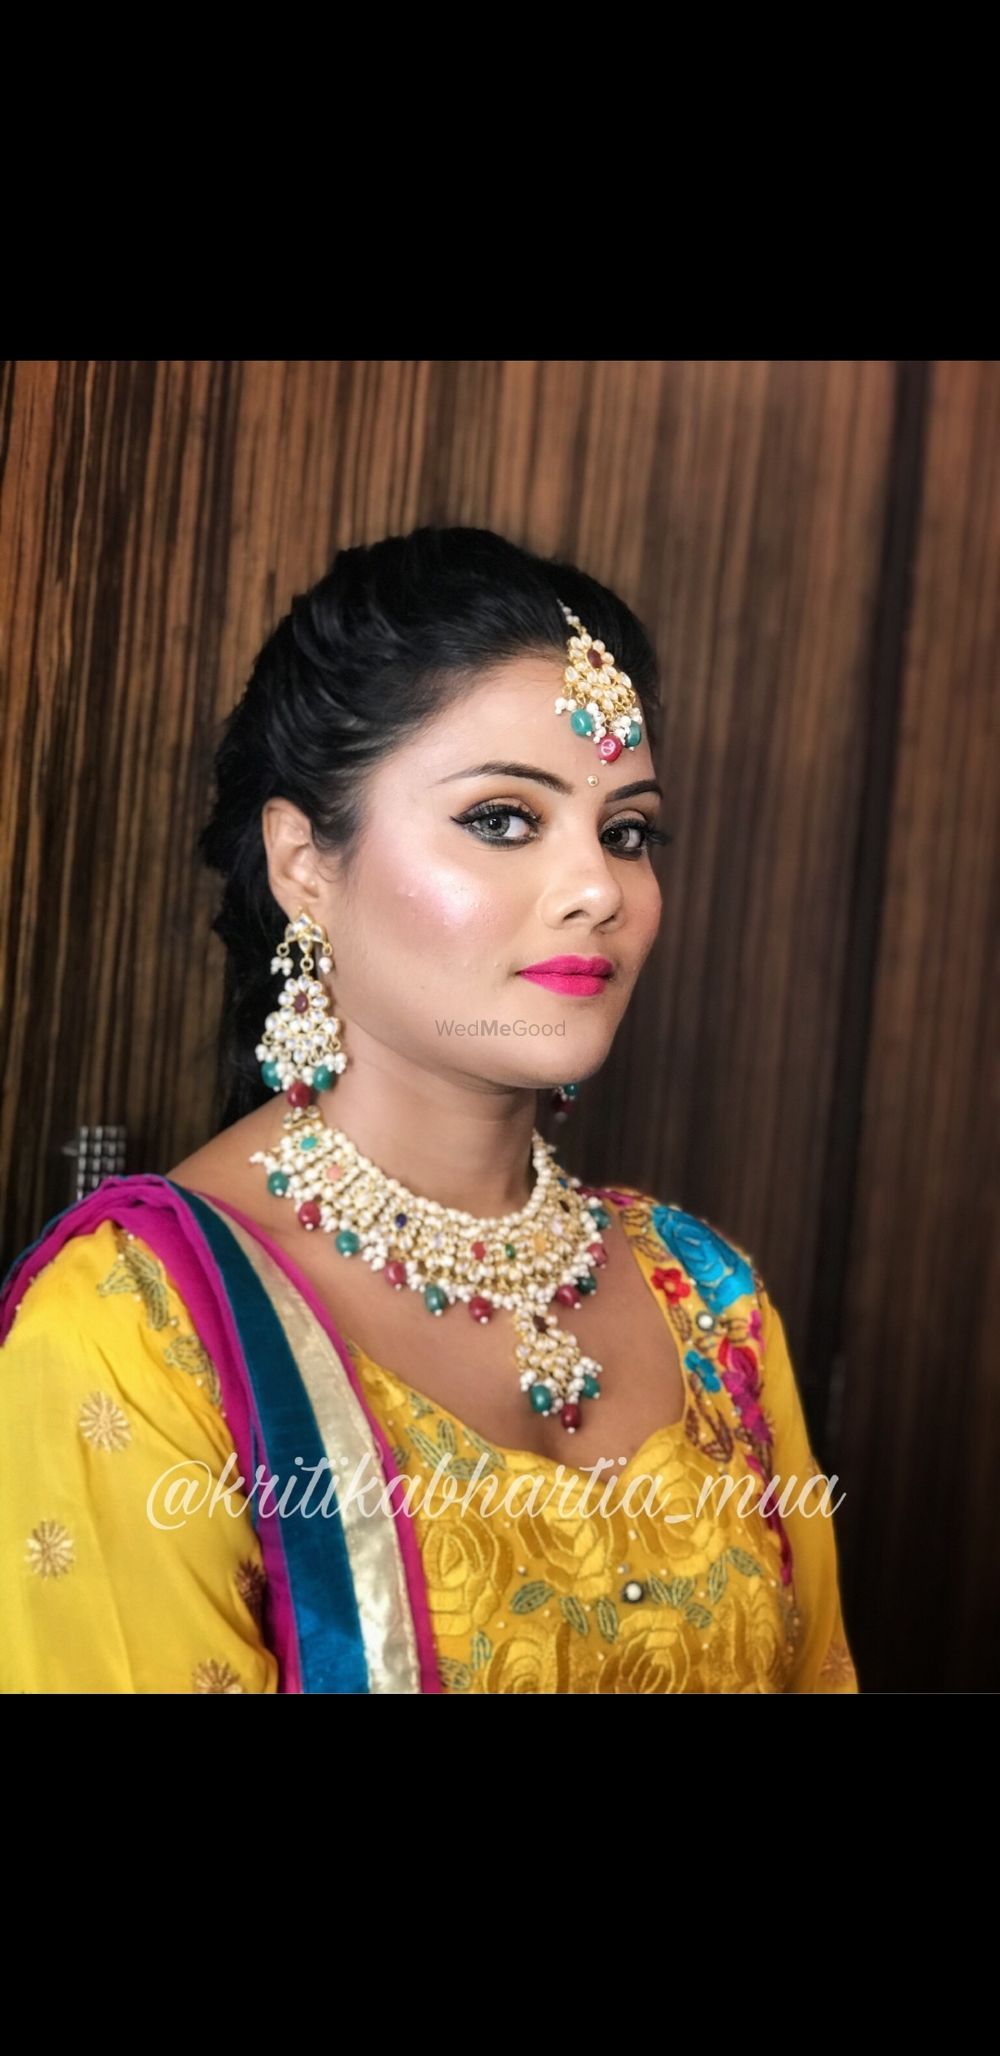 Photo By Kritika Bhartia Mua - Bridal Makeup